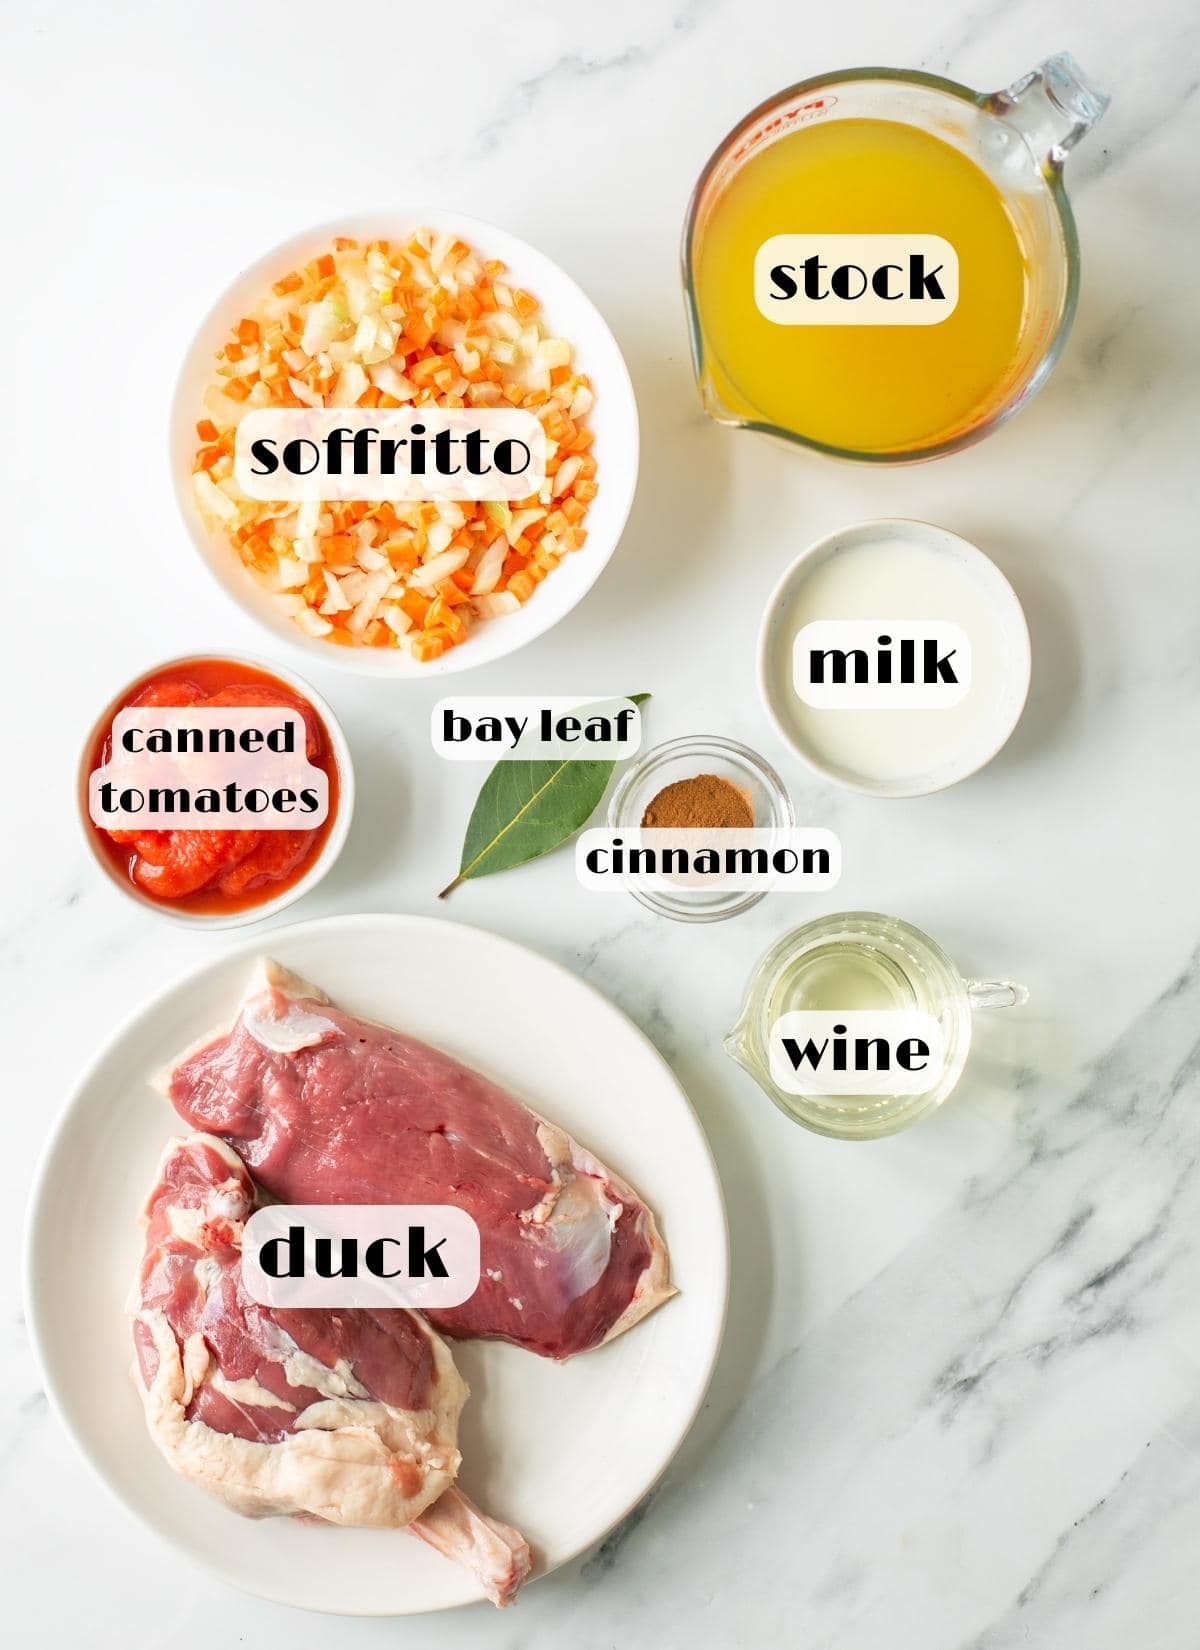 duck ragu ingredients: duck breast, carrot, celery, onion, cinnamon, bay leaf, wine, tomatoes, stock and milk.